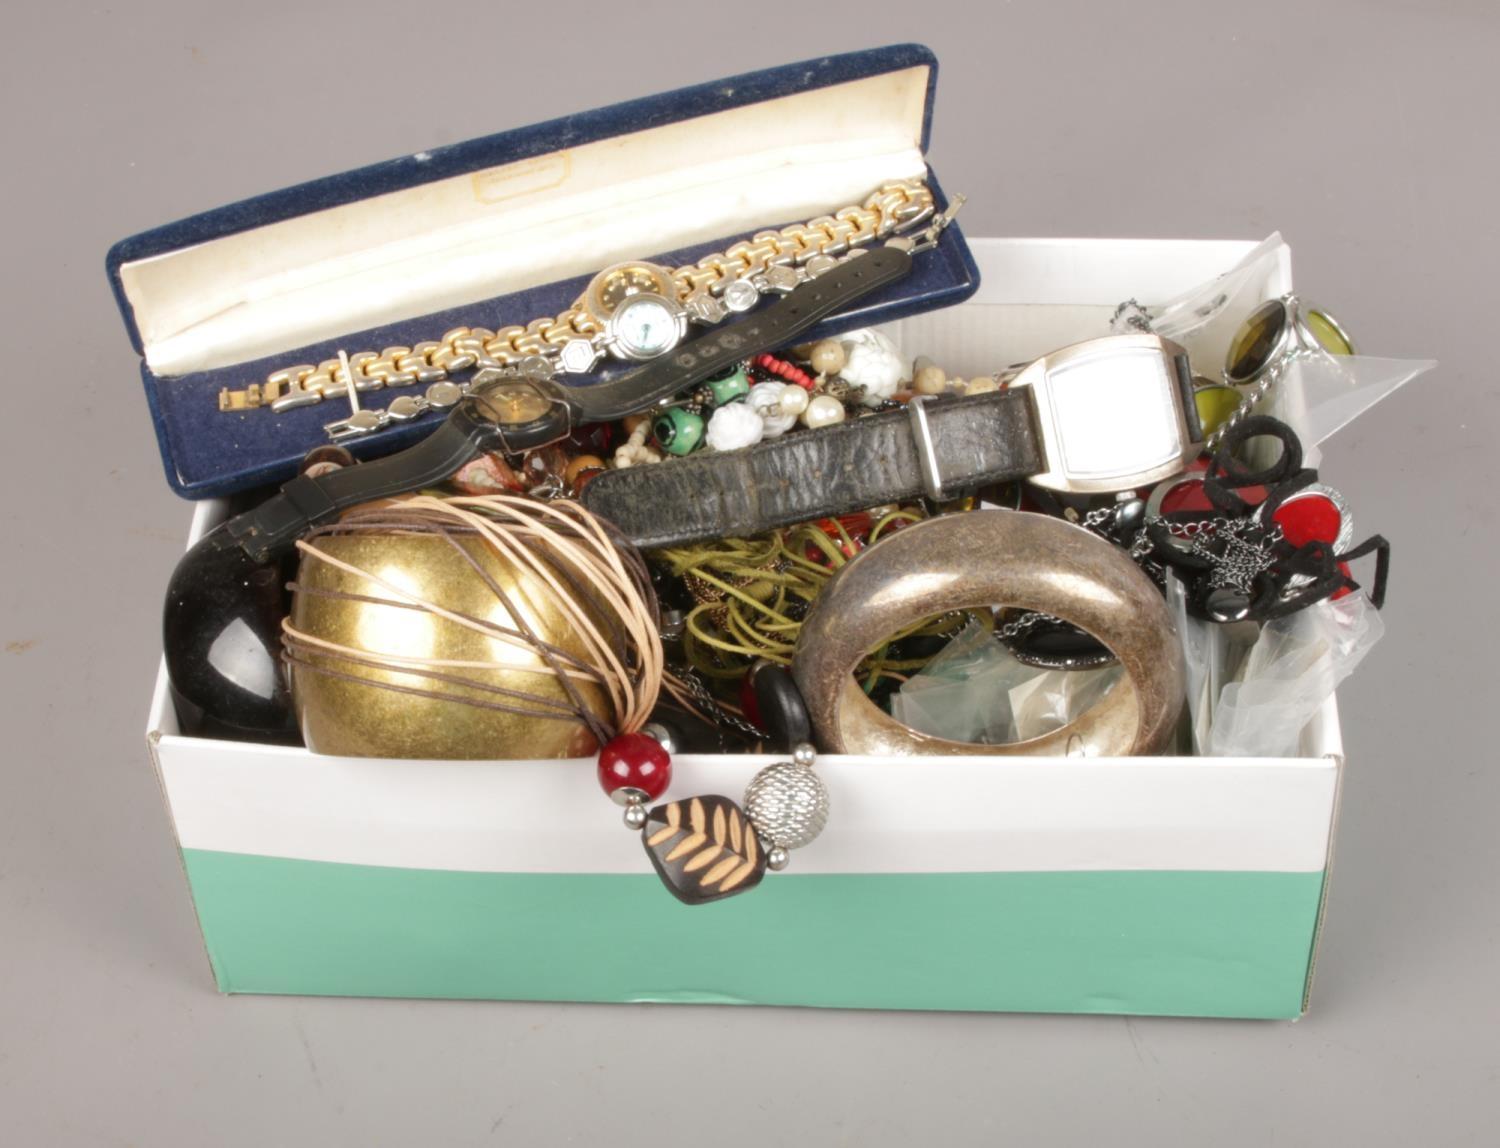 A box of costume jewellery, bangles, necklaces, quartz wristwatches etc